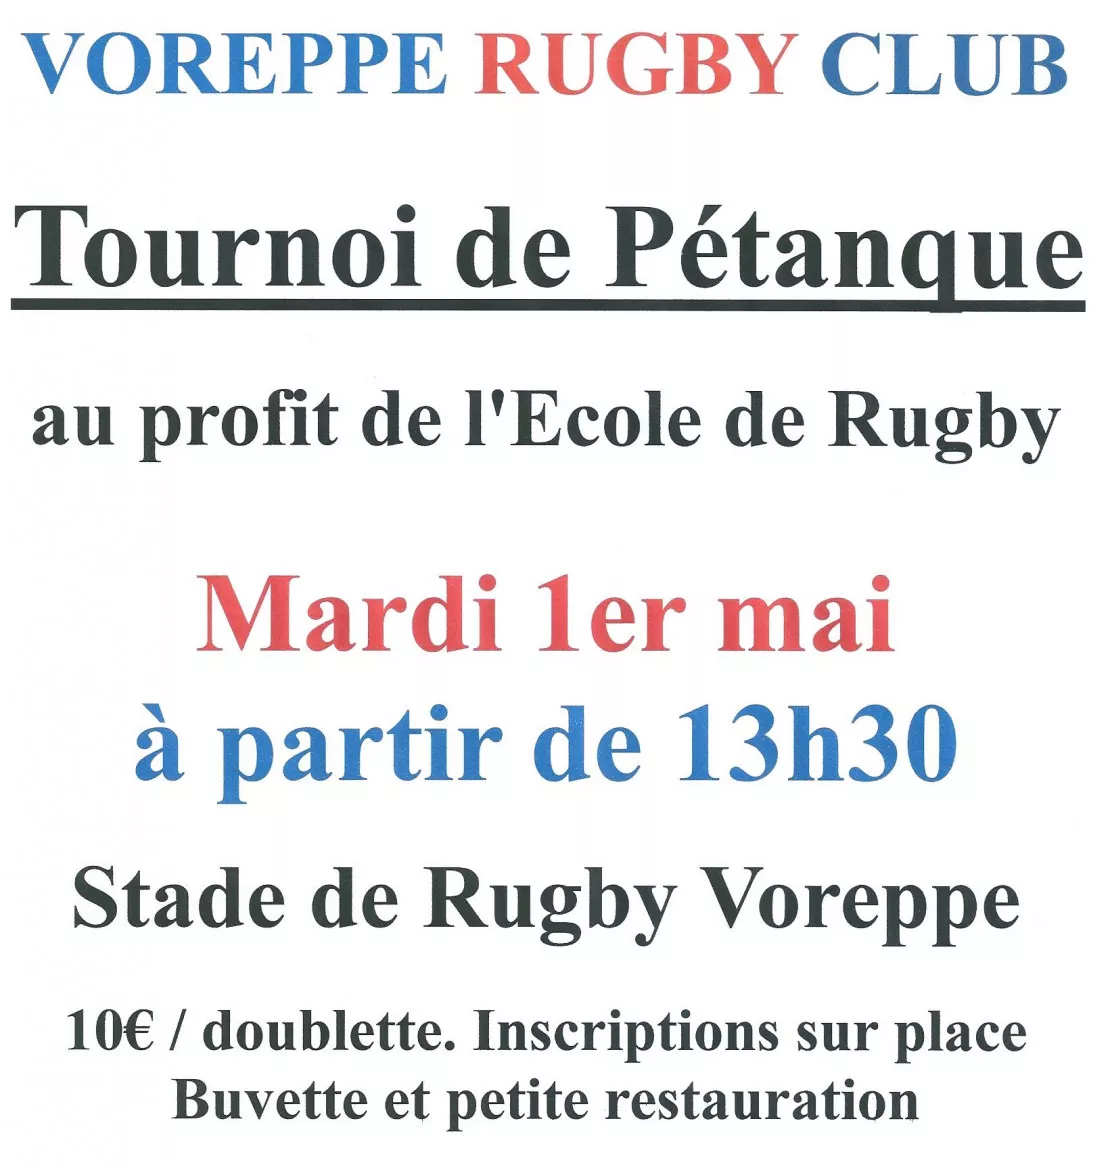 Tournoi pétanque du Voreppe Rugby Club